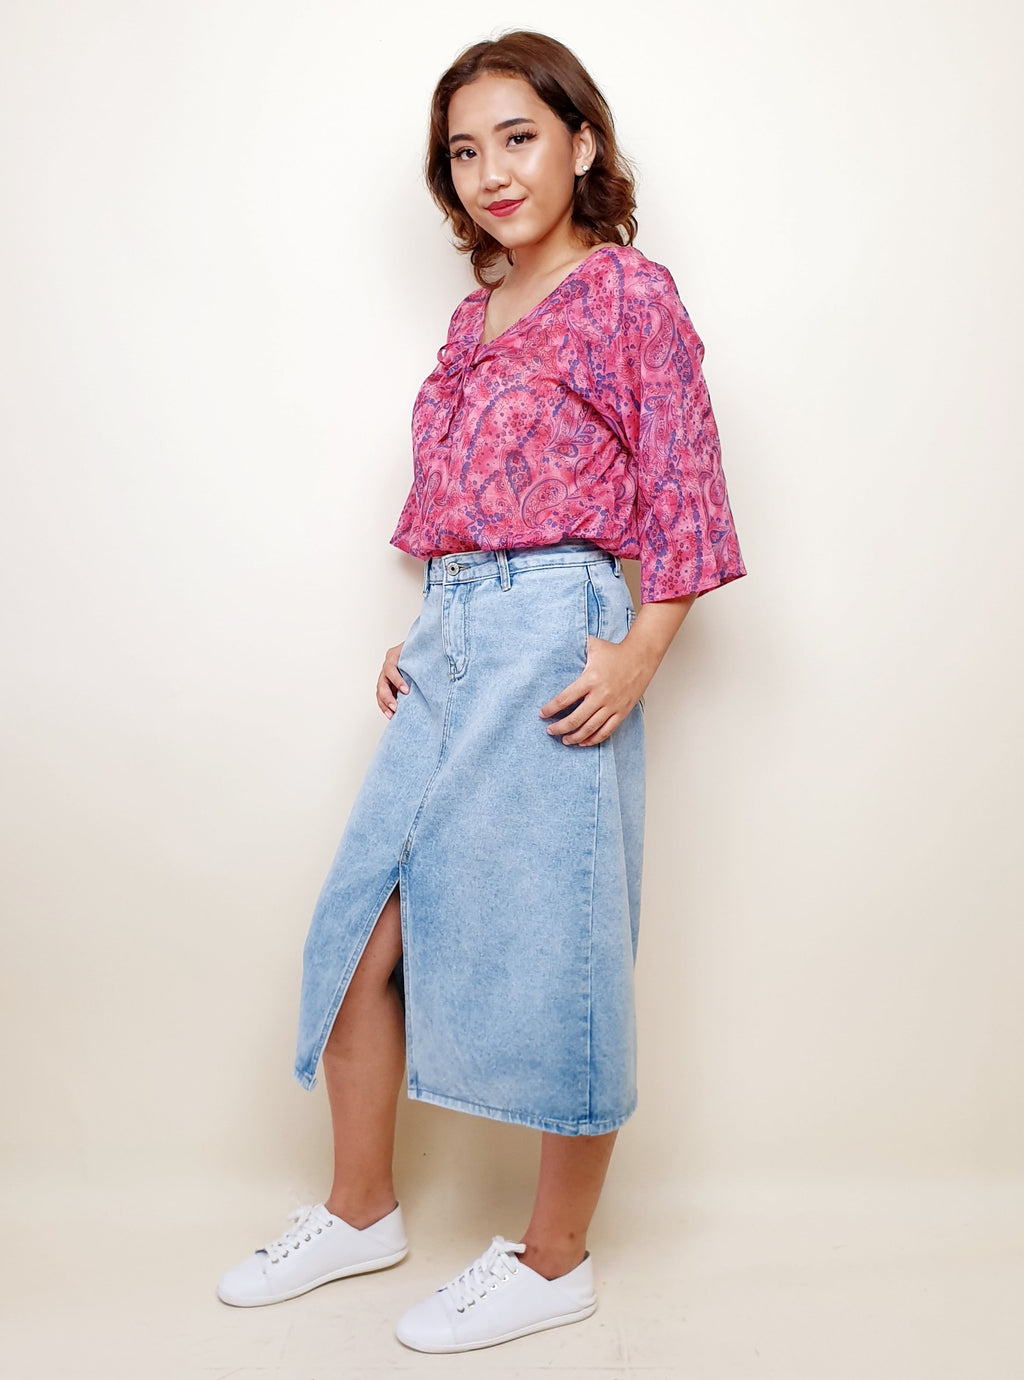 Denim Skirt with Centre Slit | Angie's Fashion